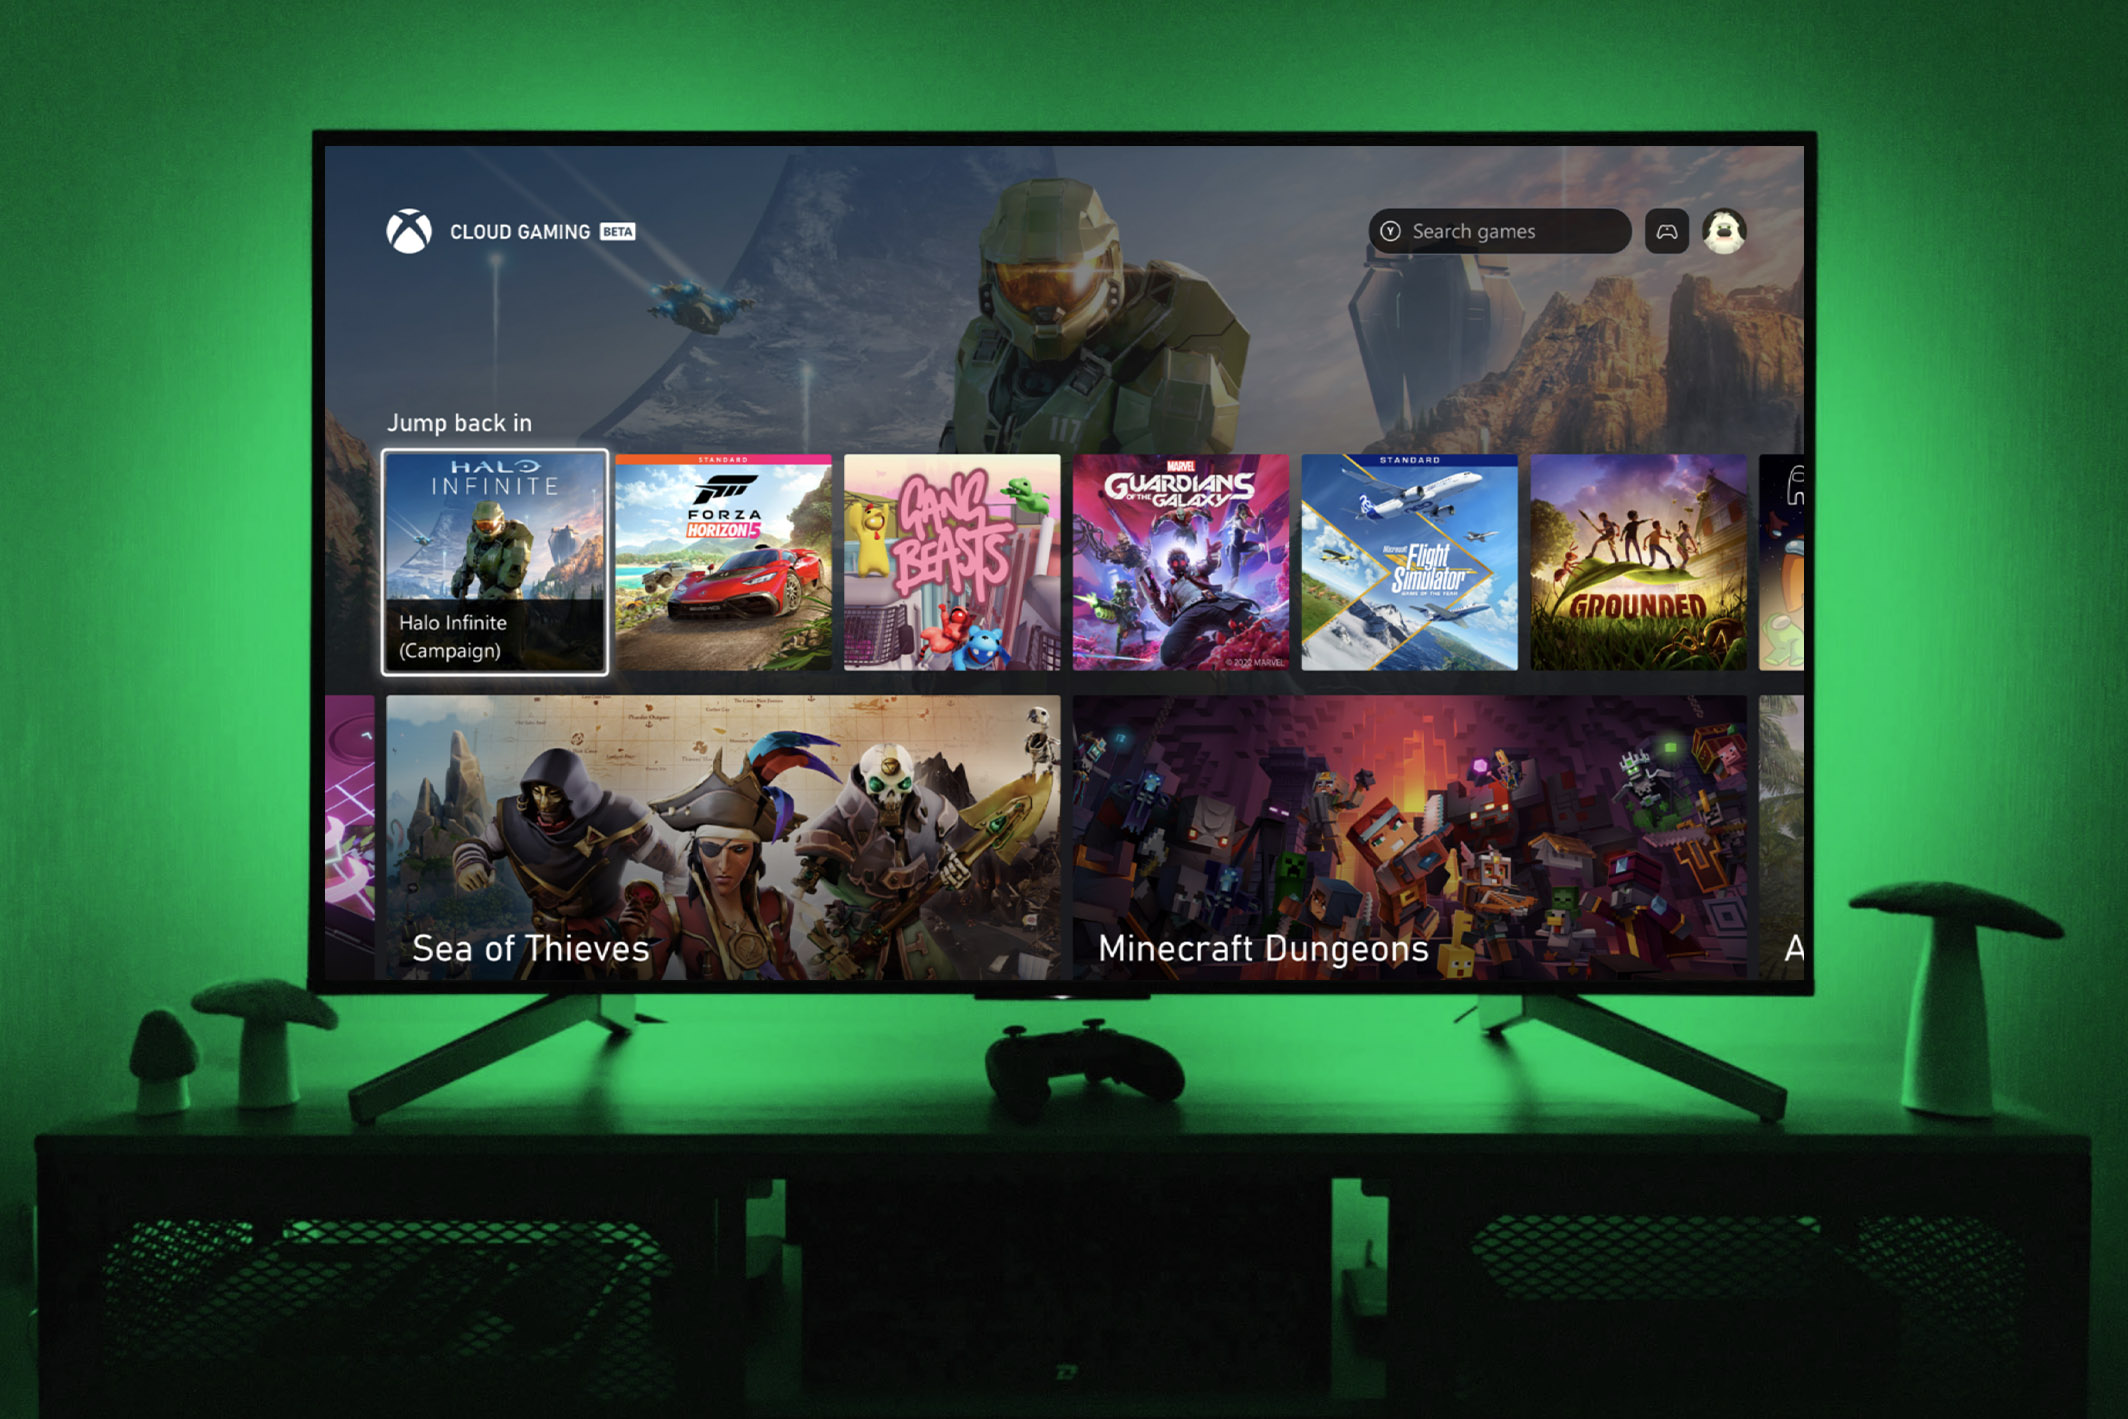 Xbox Game Pass PC 1 month Microsoft key, Buy cheaper